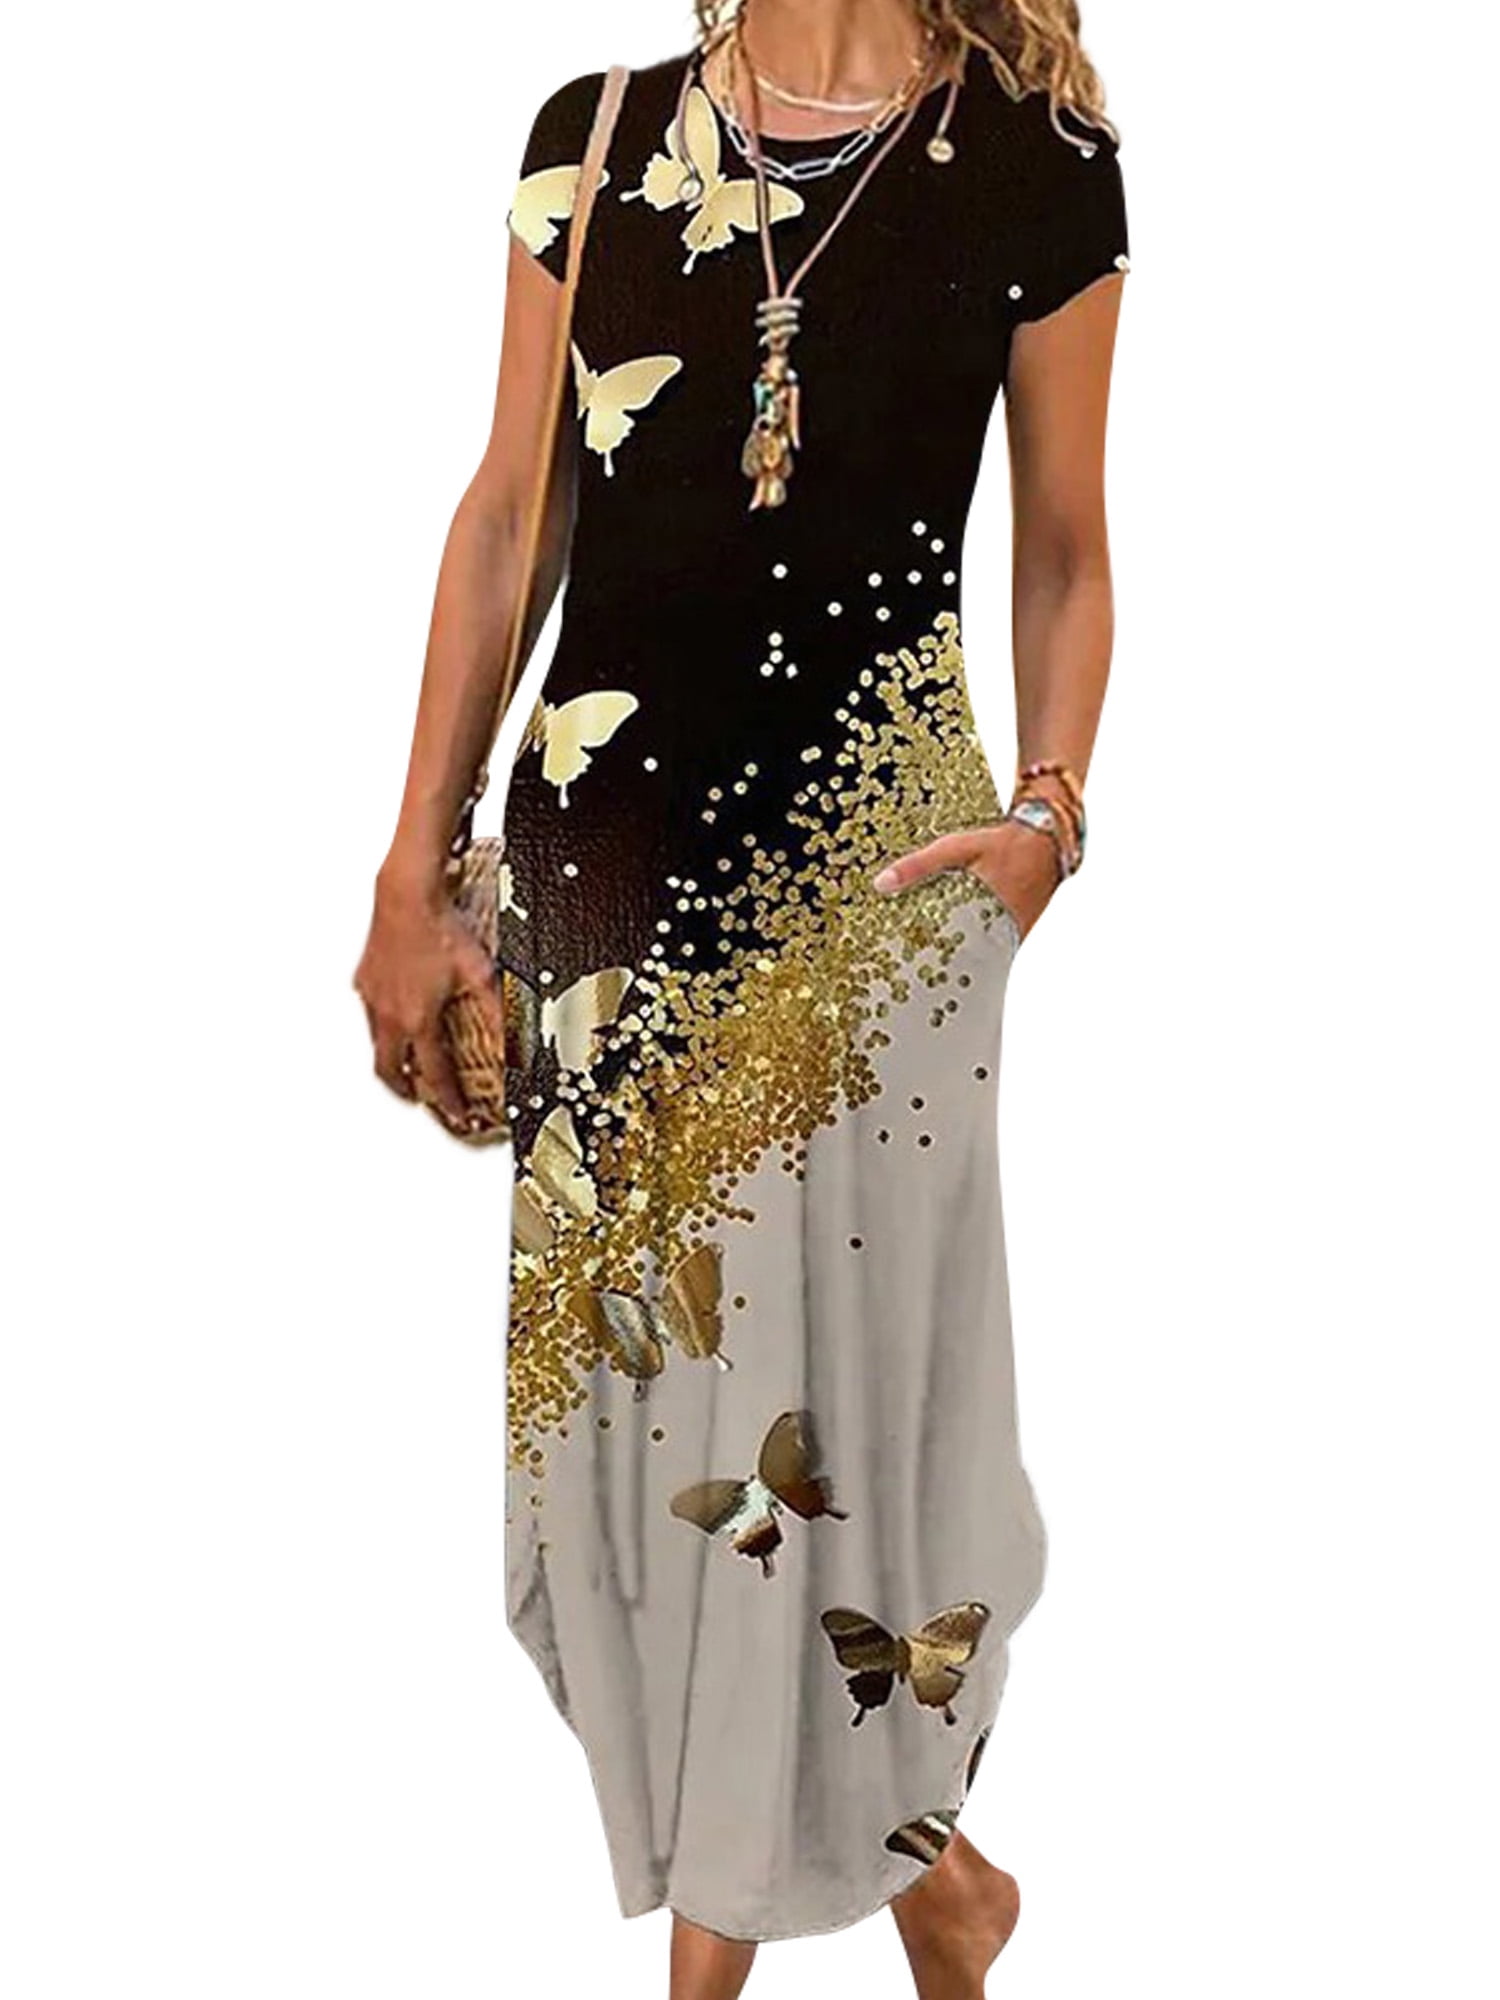 HDE Women's Cotton Nightgowns Short Sleeve Sleep Dress Coffee Tie Dye 4X-5X  